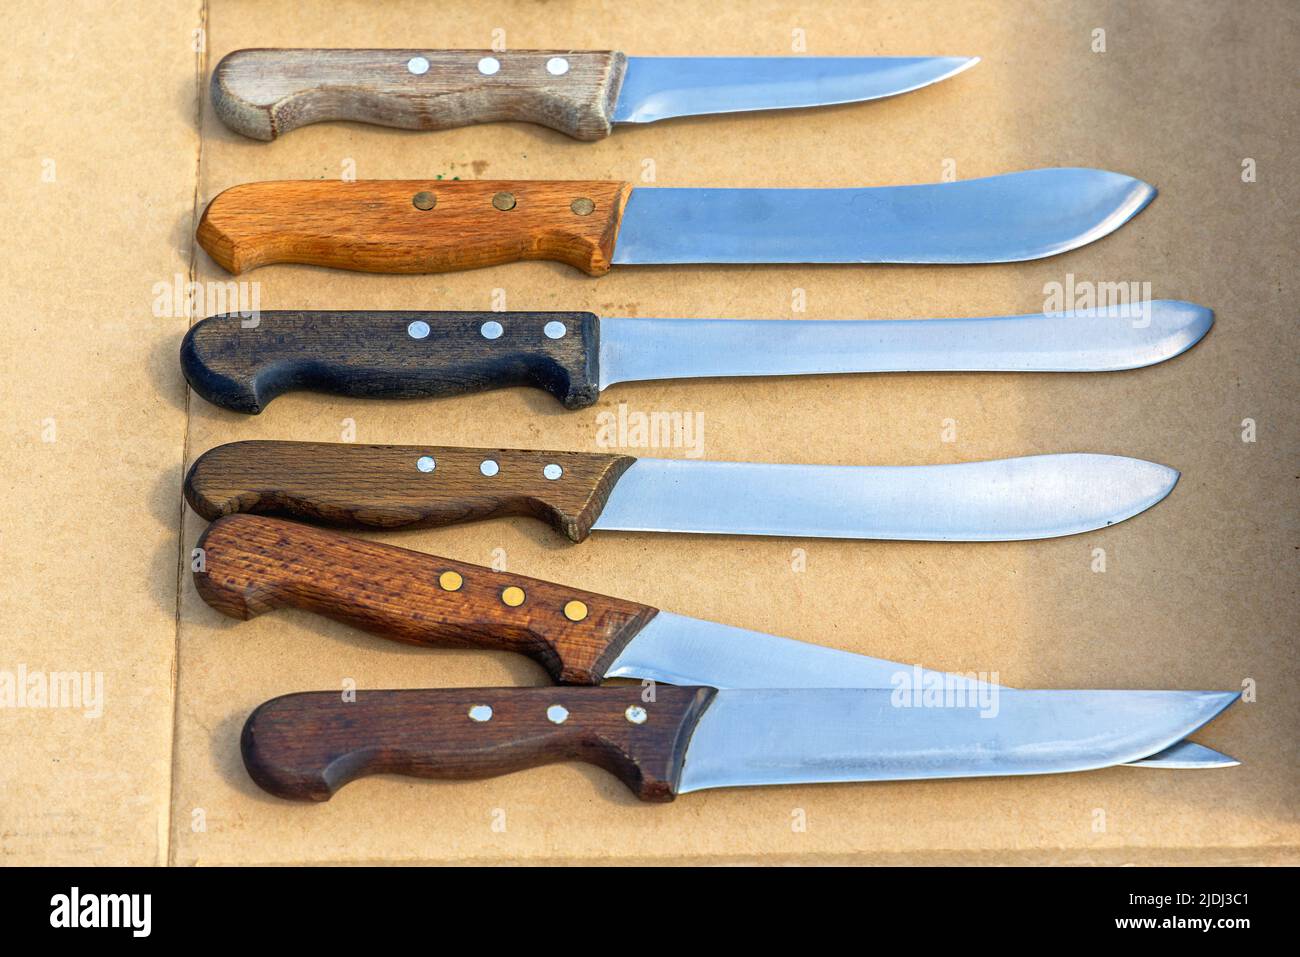 https://c8.alamy.com/comp/2JDJ3C1/used-butcher-knife-set-with-wooden-handles-2JDJ3C1.jpg